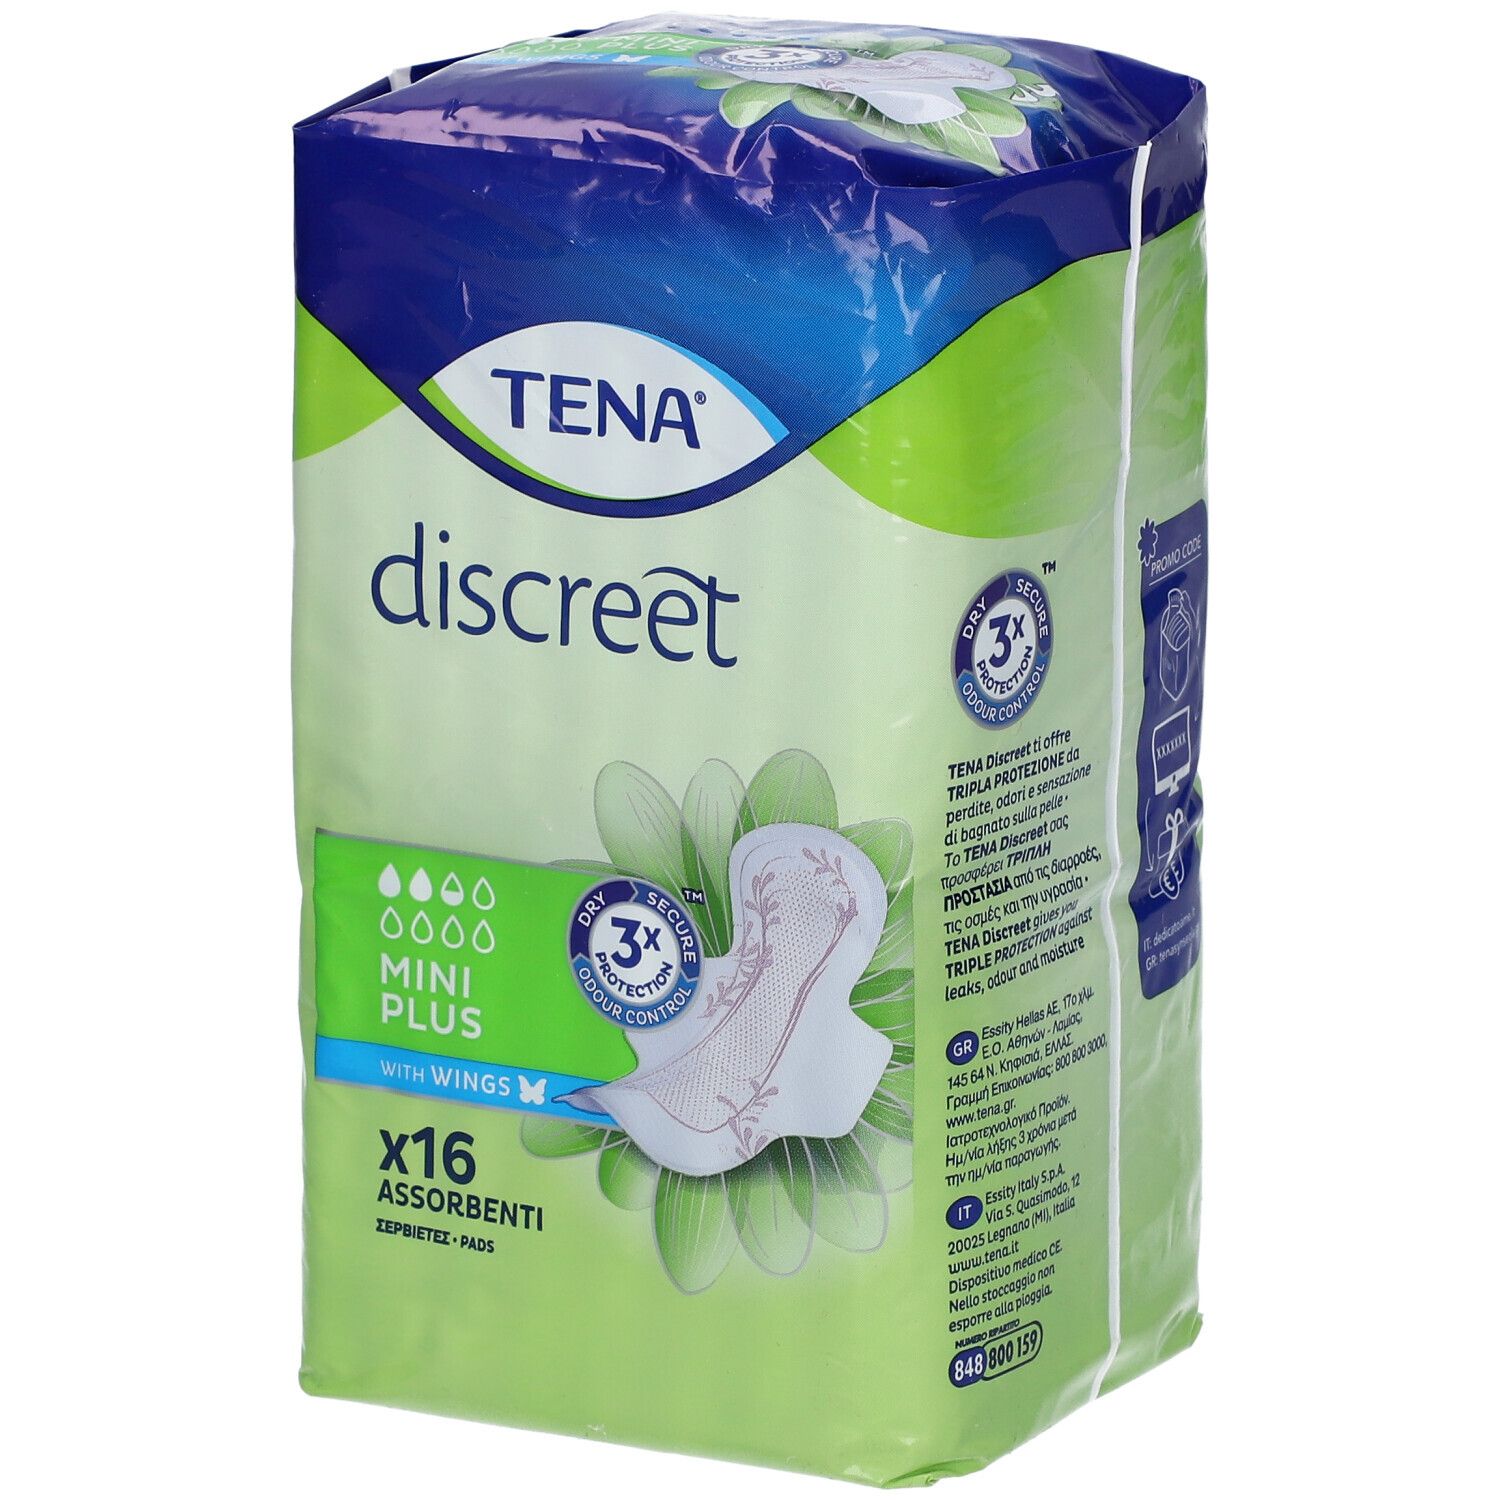 TENA® Lady Discreet Mini Plus with Wings